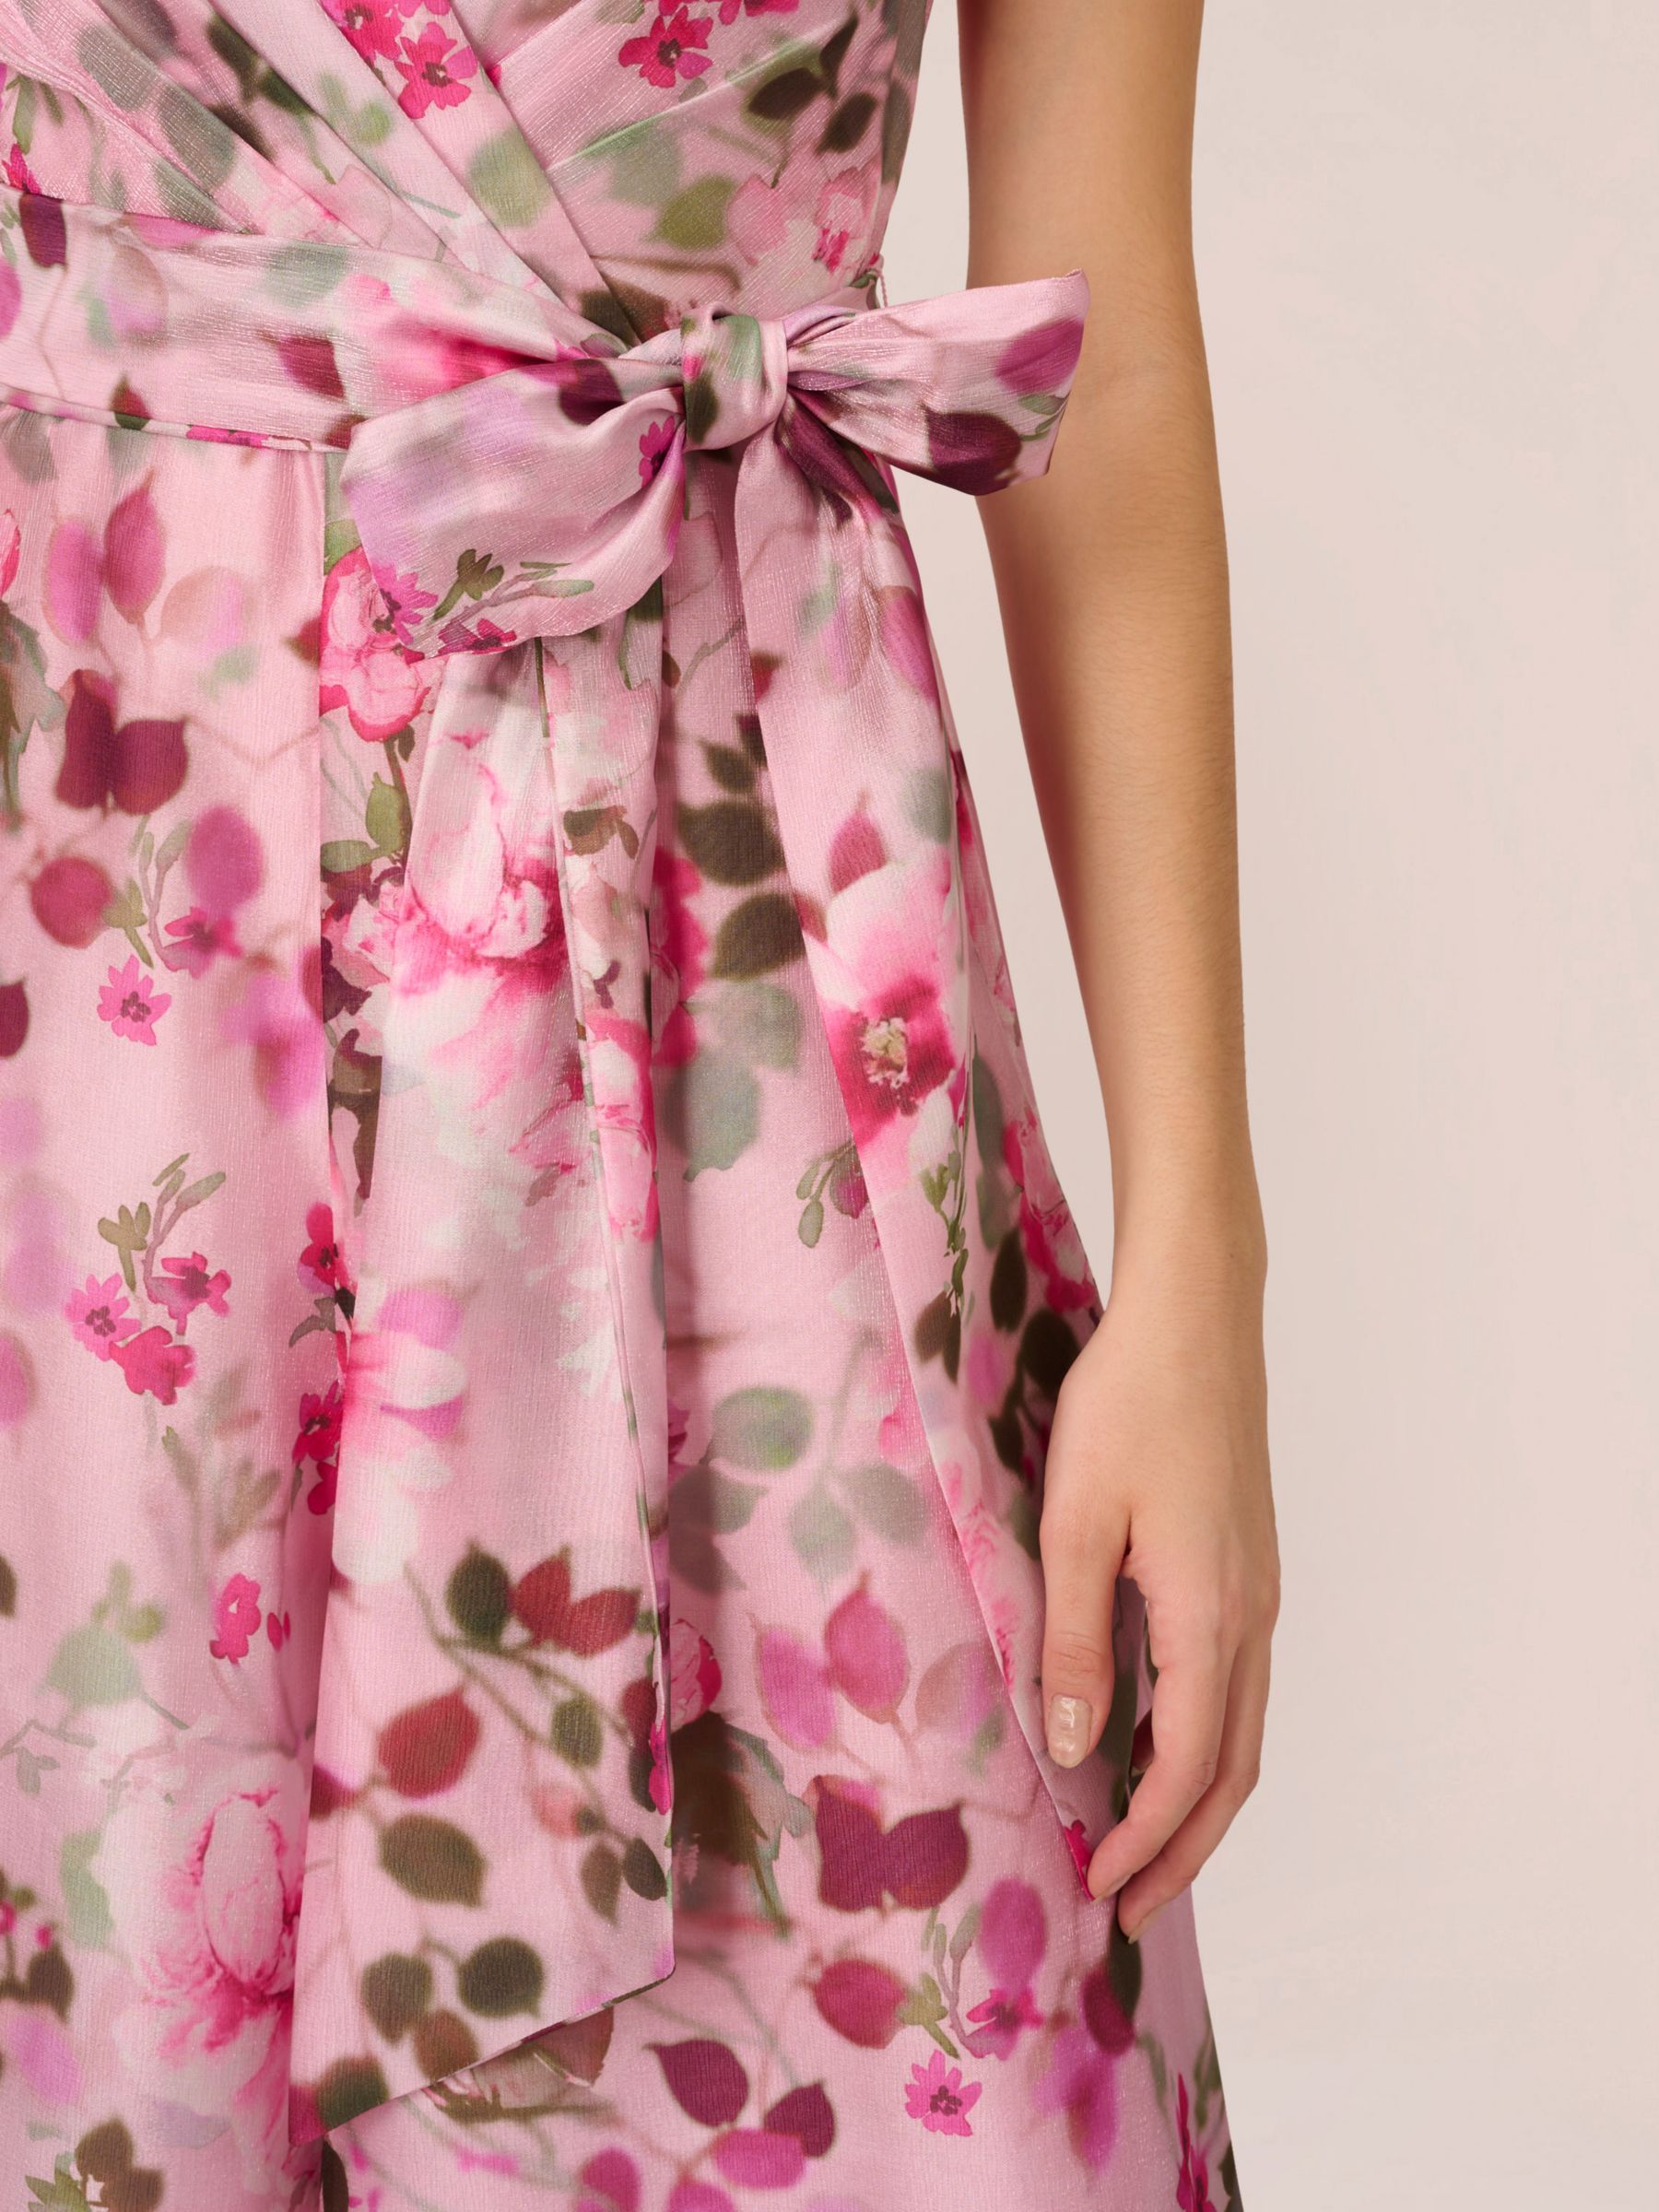 Adrianna Papell Floral Sleeveless Jumpsuit, Pink/Multi, 6